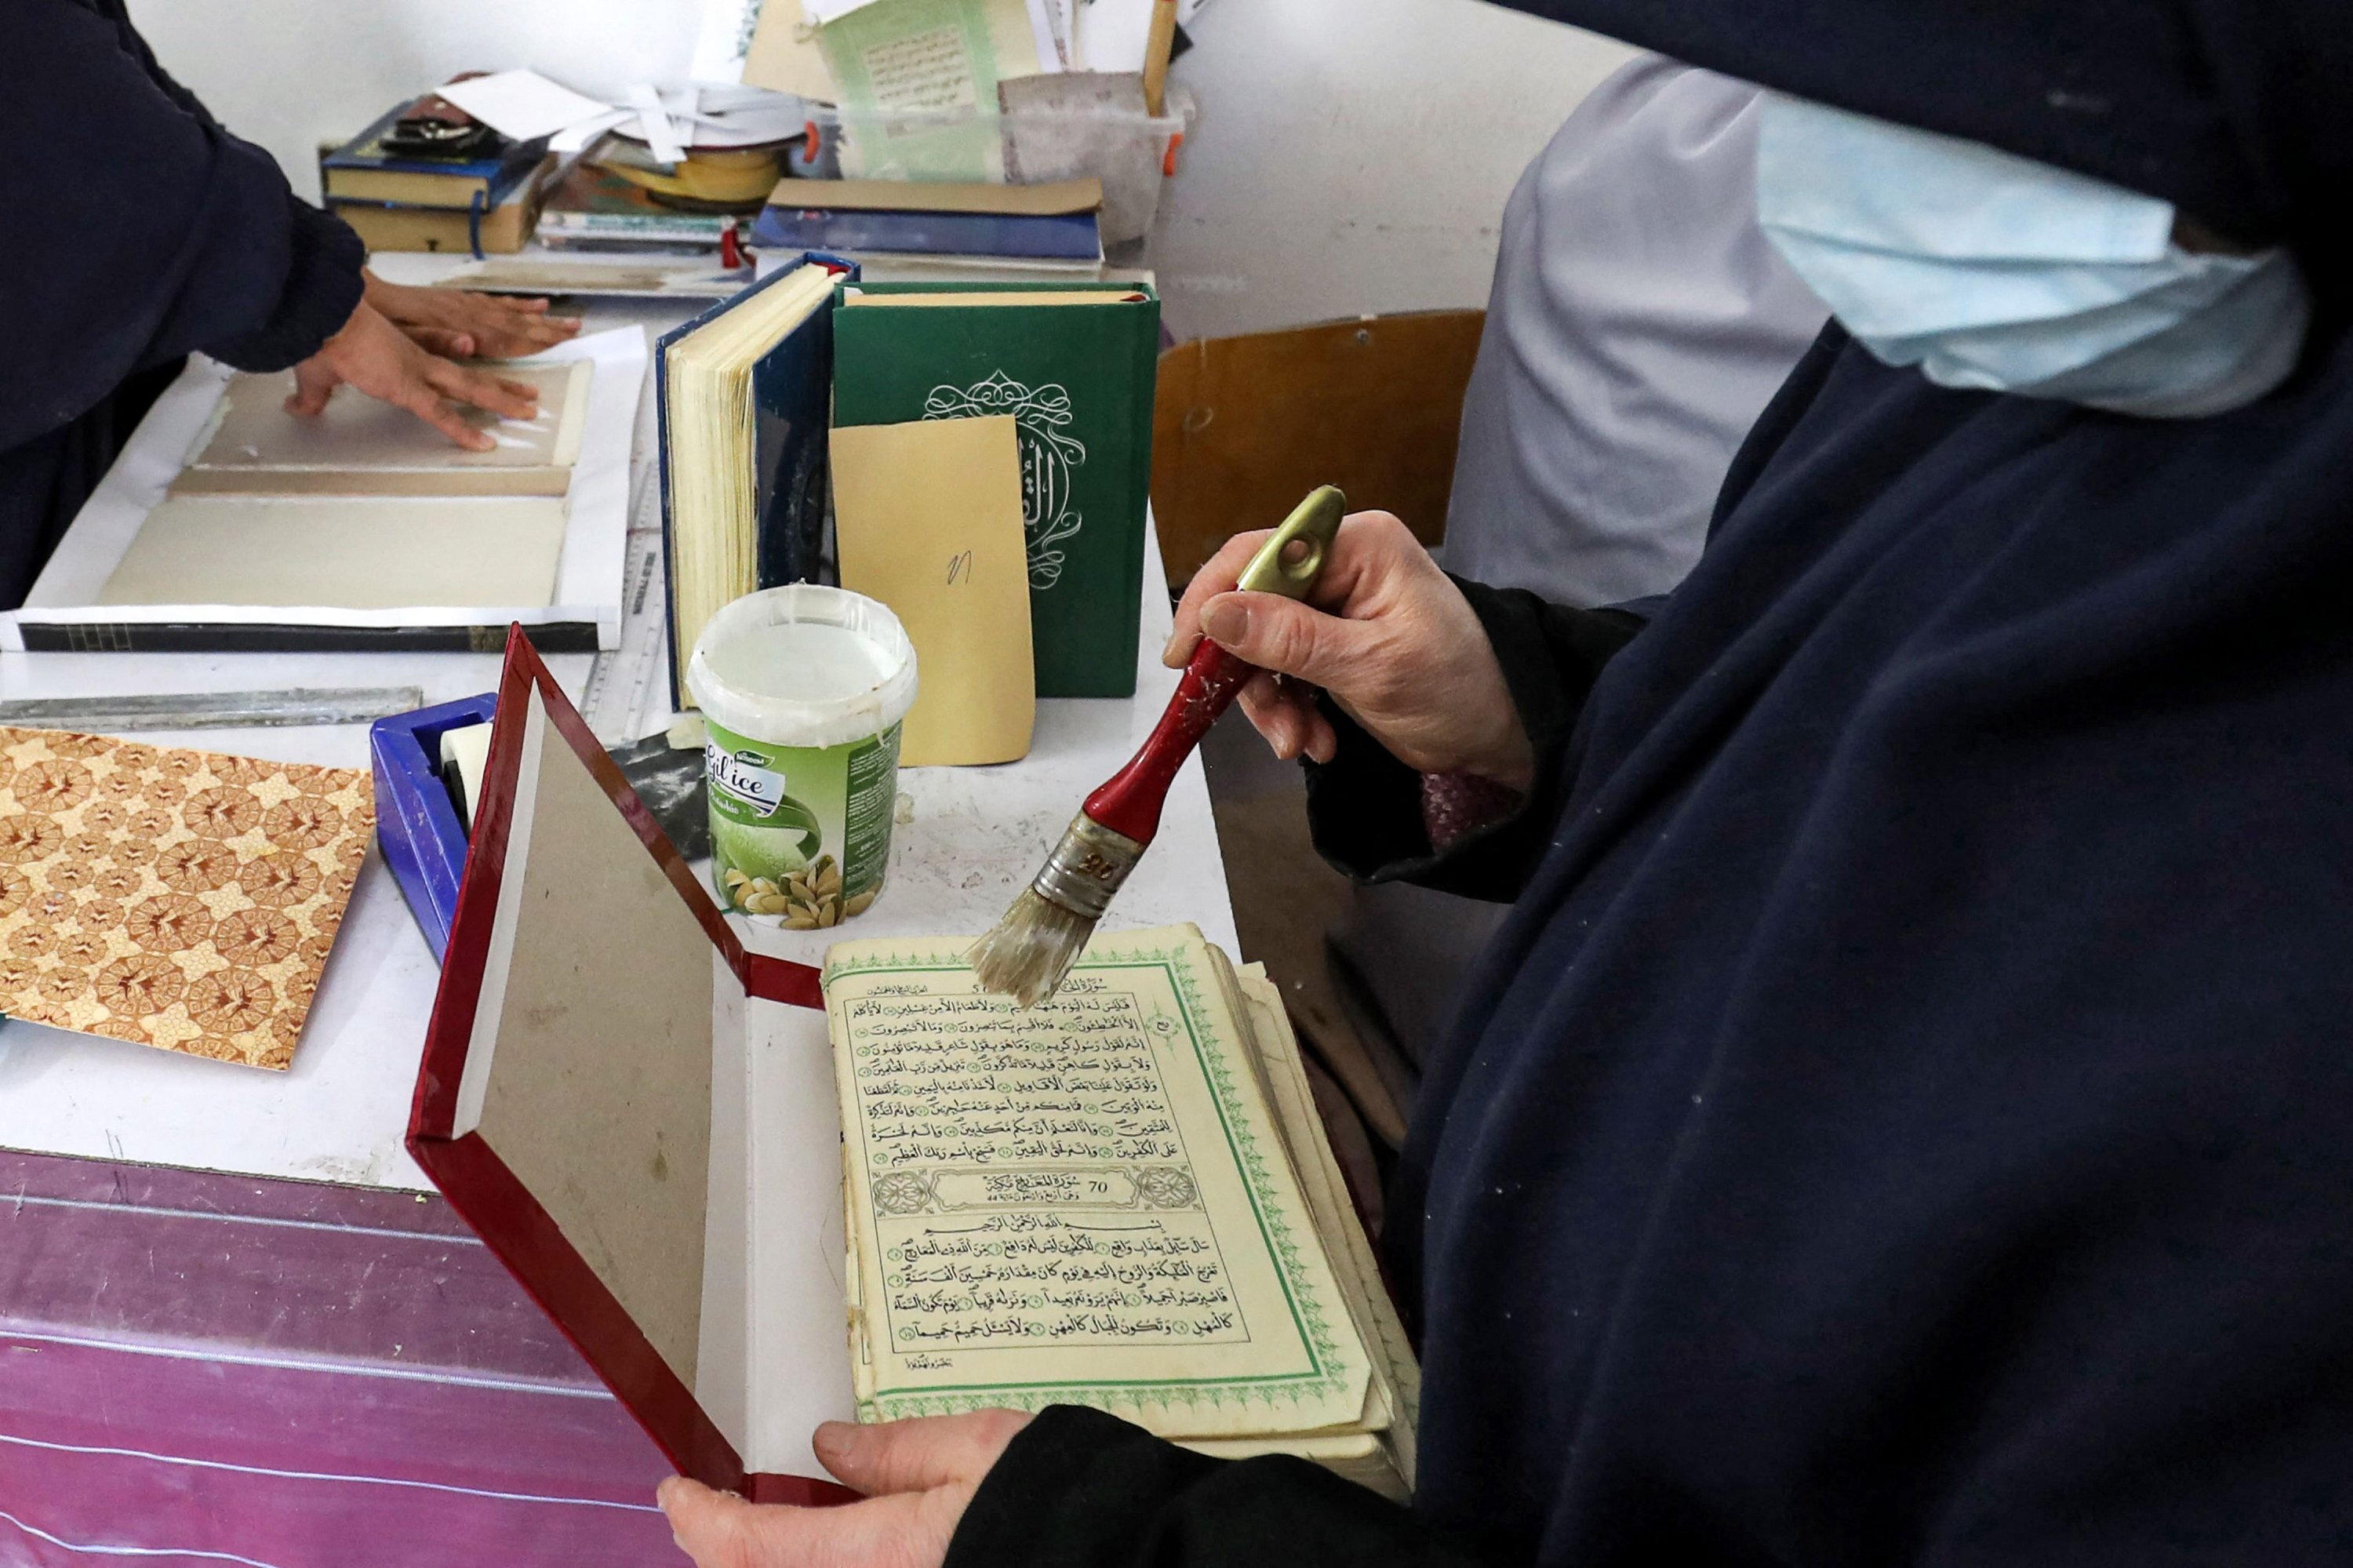 Seorang wanita bersiap untuk menjilid sampul keras sebuah volume Al-Qur'an, kitab suci Islam, selama lokakarya restorasi salinannya di ibu kota Libya, Tripoli, 22 Maret 2022. (AFP Photo)